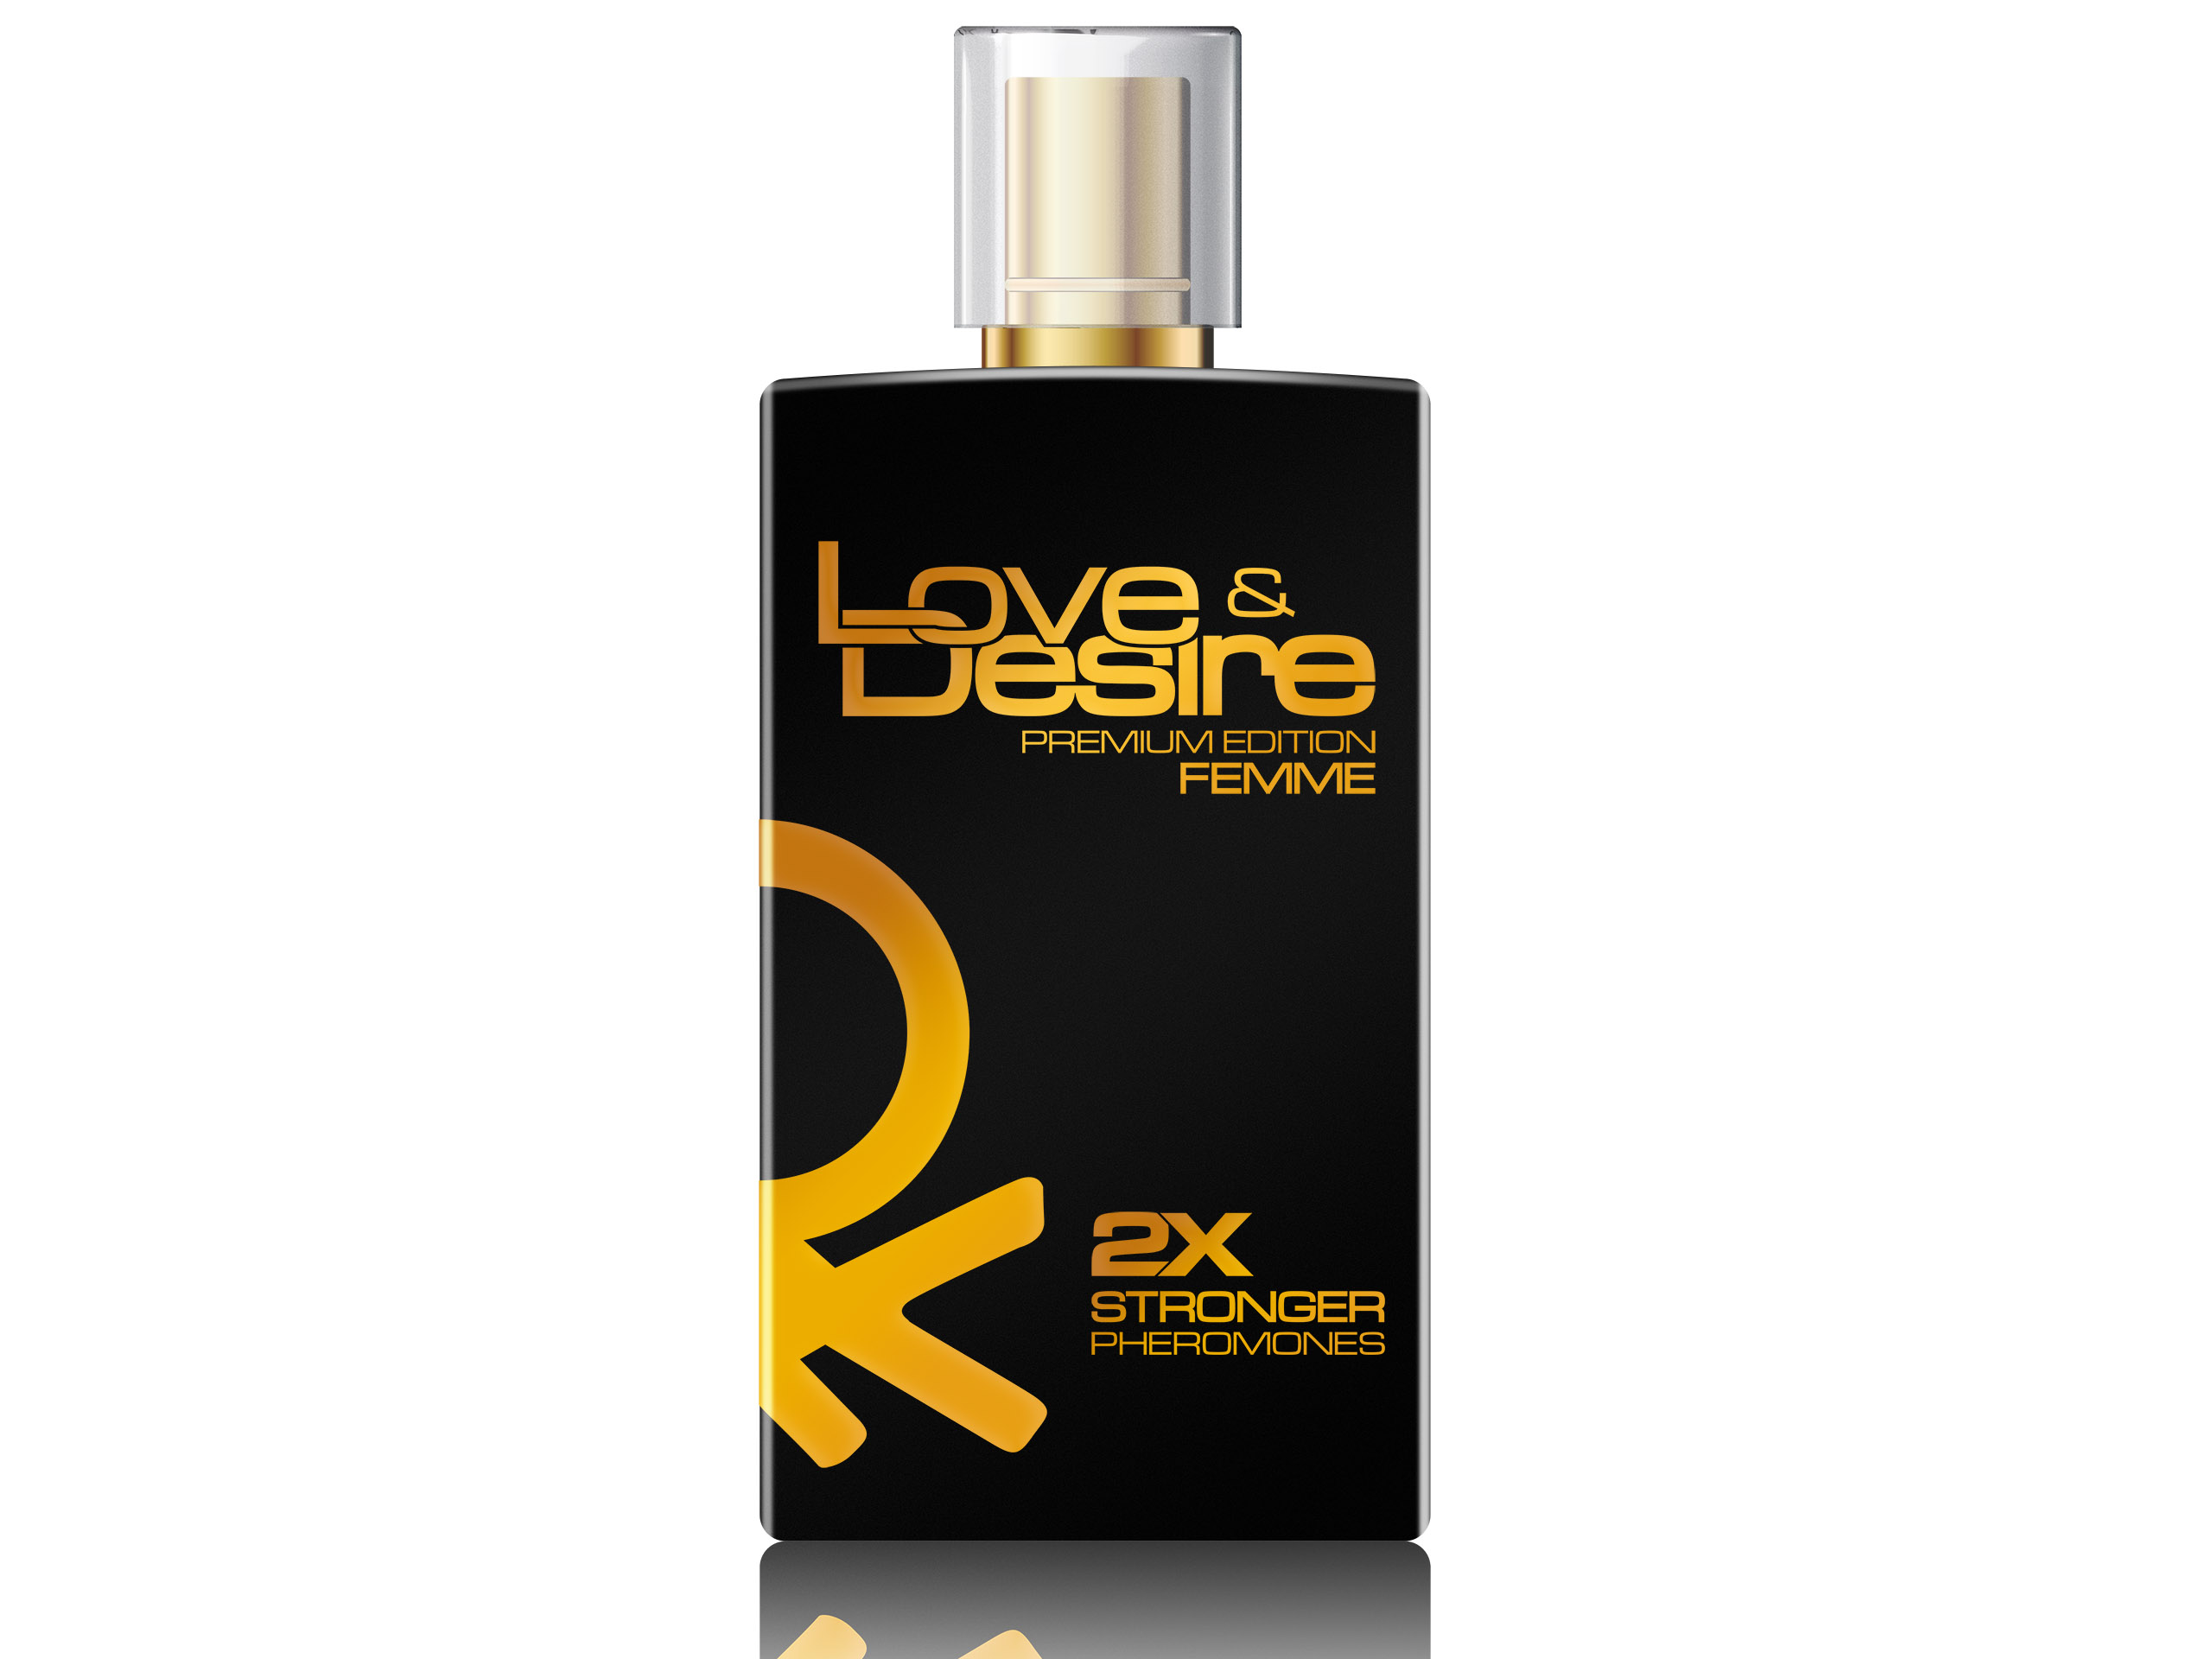 LOVE DESIRE PREMIUM GOLD WOMEN PARFUME PHEROMONES Kód výrobce Love wish zlatý parfém s feromony